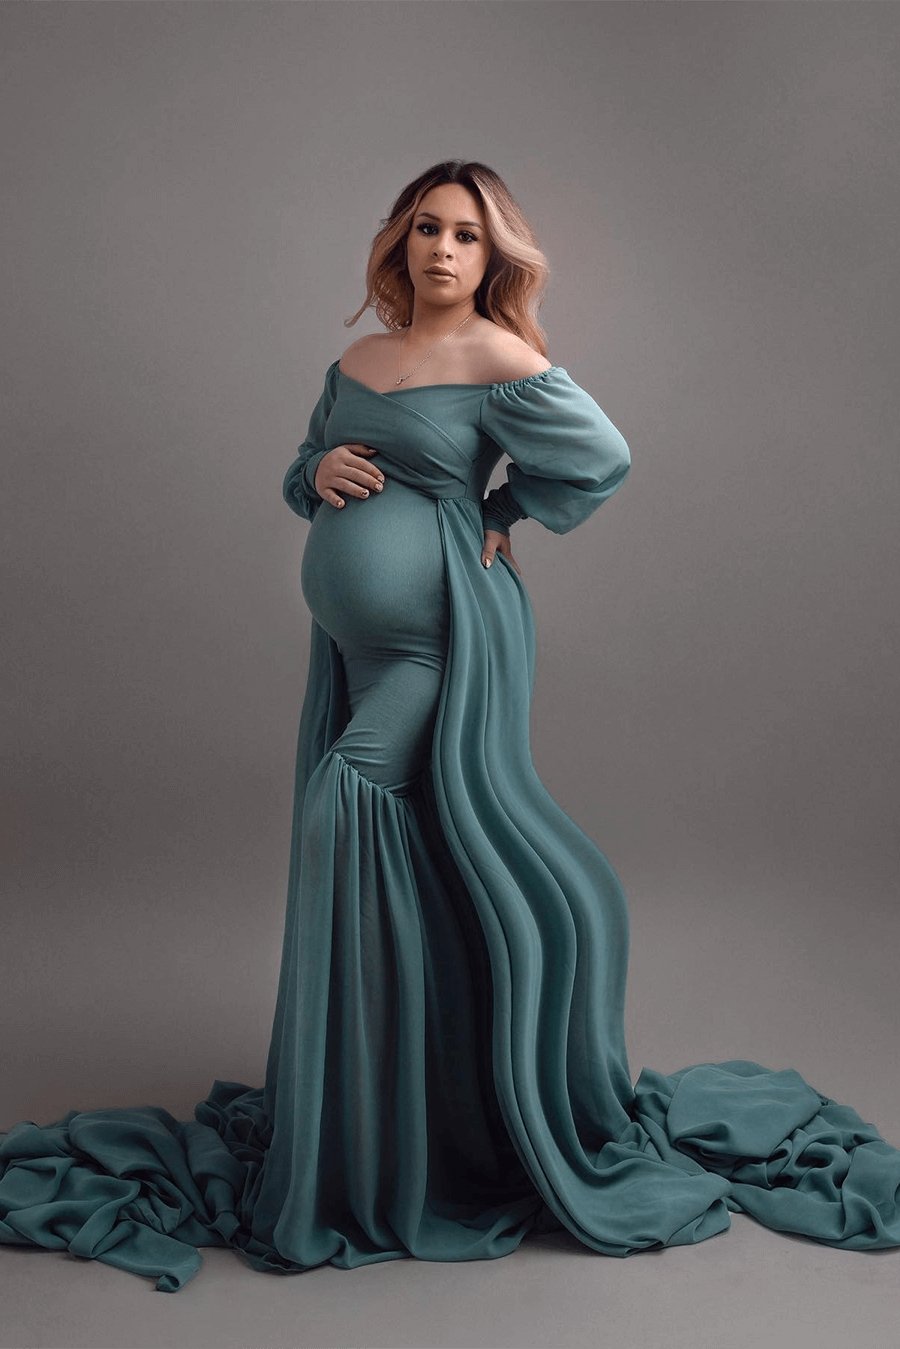 Freesia Maternity Dress - Azur CLEARANCE SALE - Mii-Estilo.com